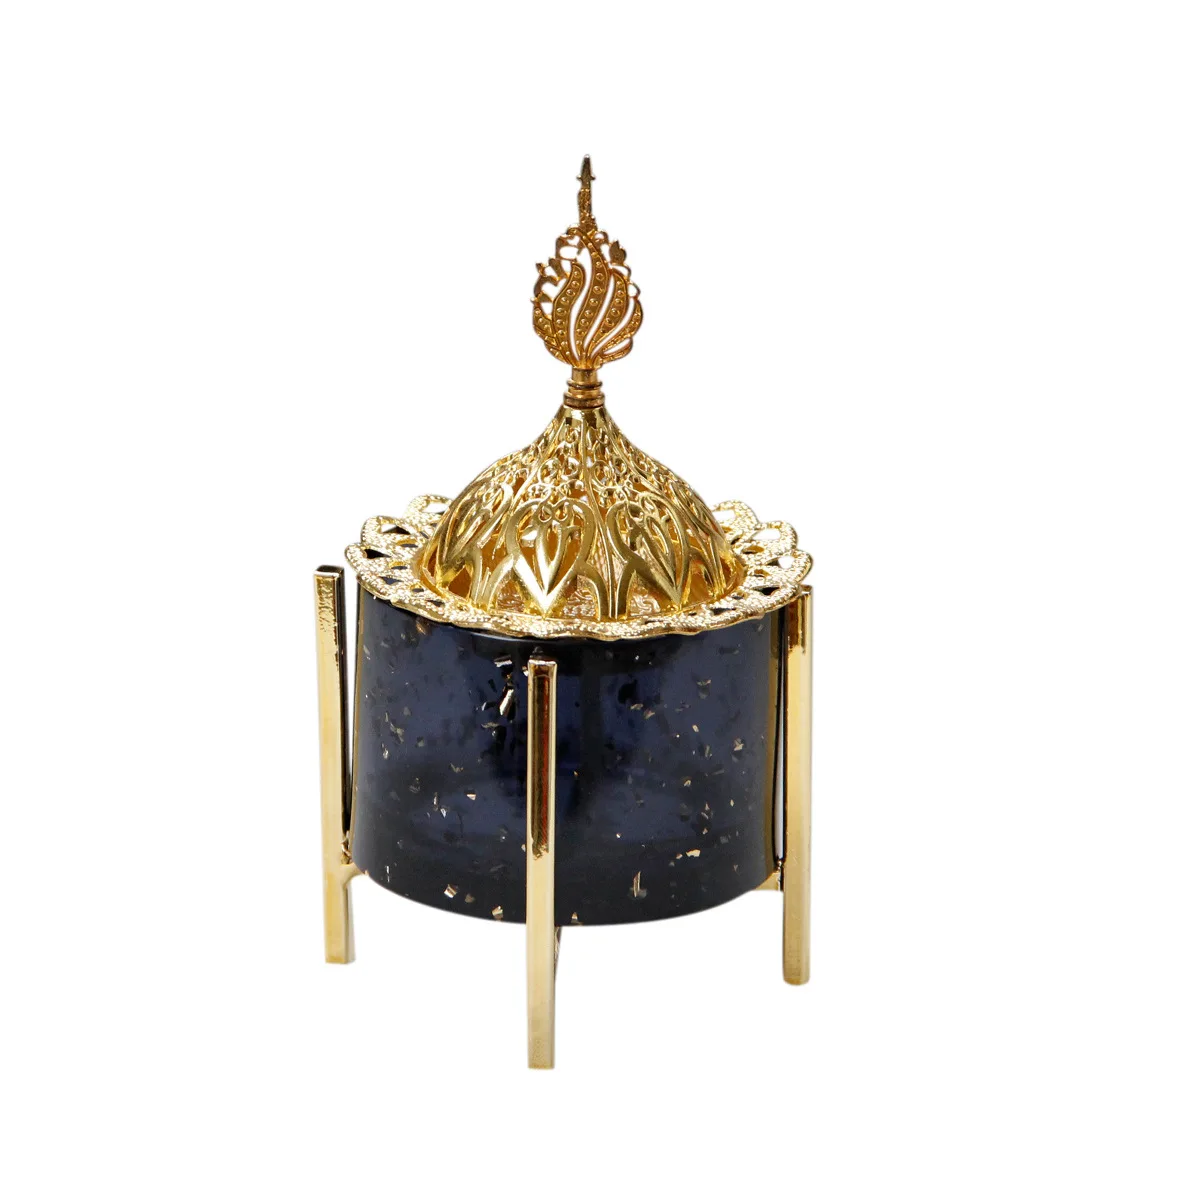 

Four-corner bracket black gold resin metal table top ornament aoud incense burner with golden hollow lid